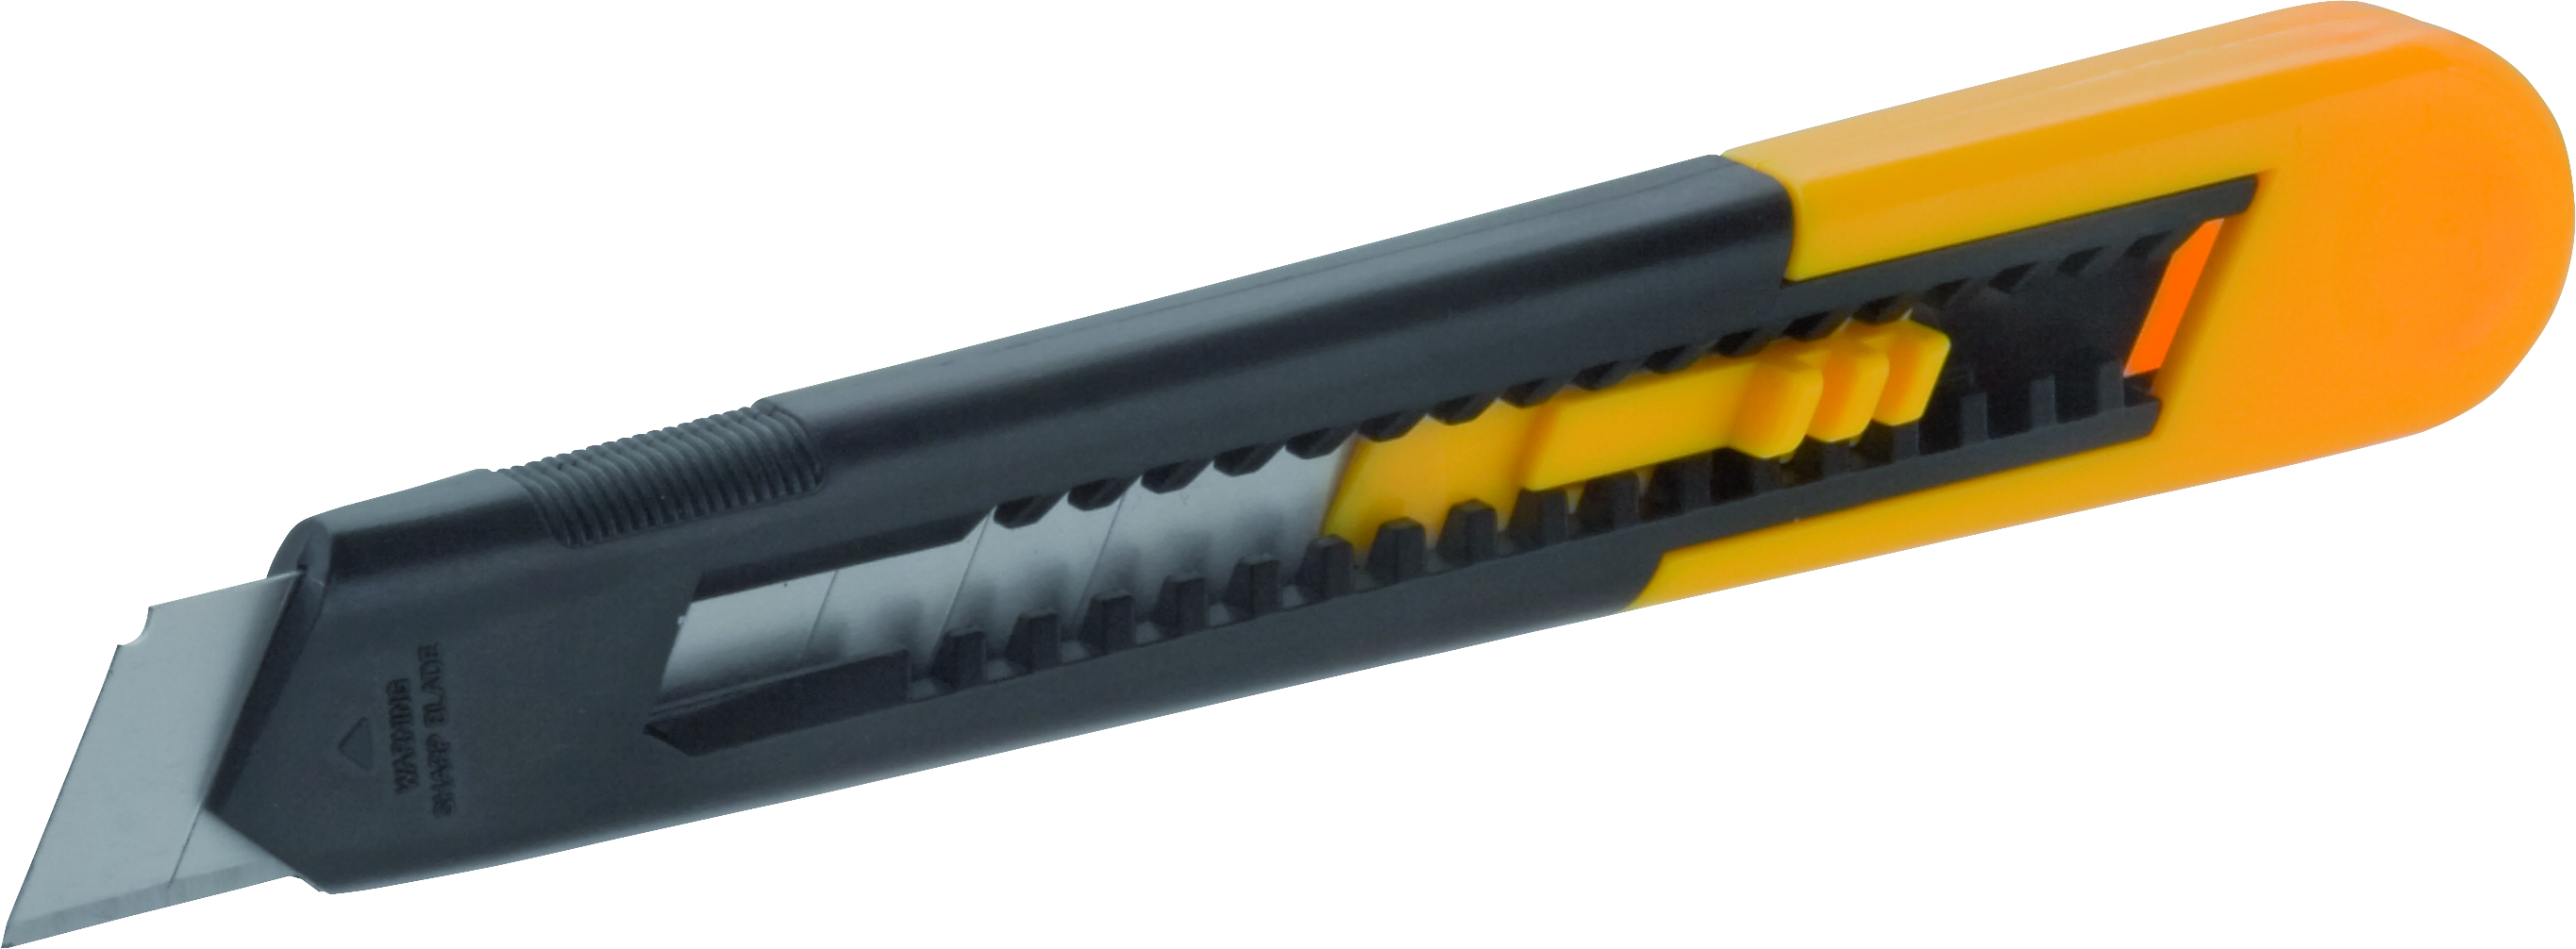 MN-63-019/1 Universal knife 18 mm